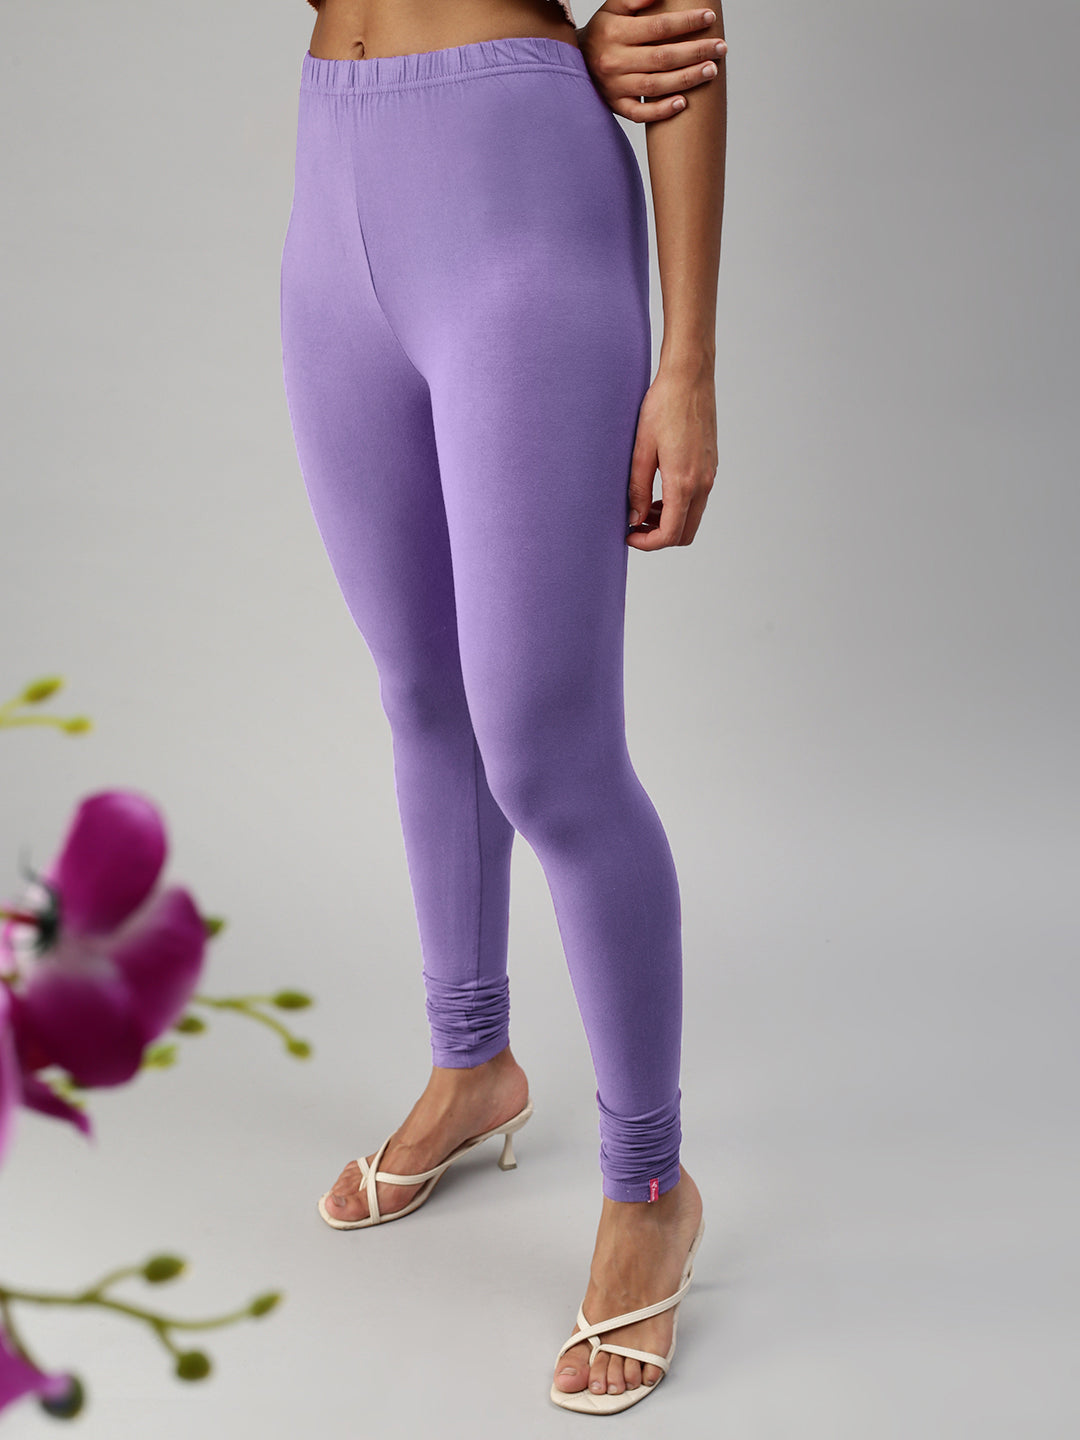 Shop Prisma's Dark Lavender Churidar Leggings for a Stylish Look